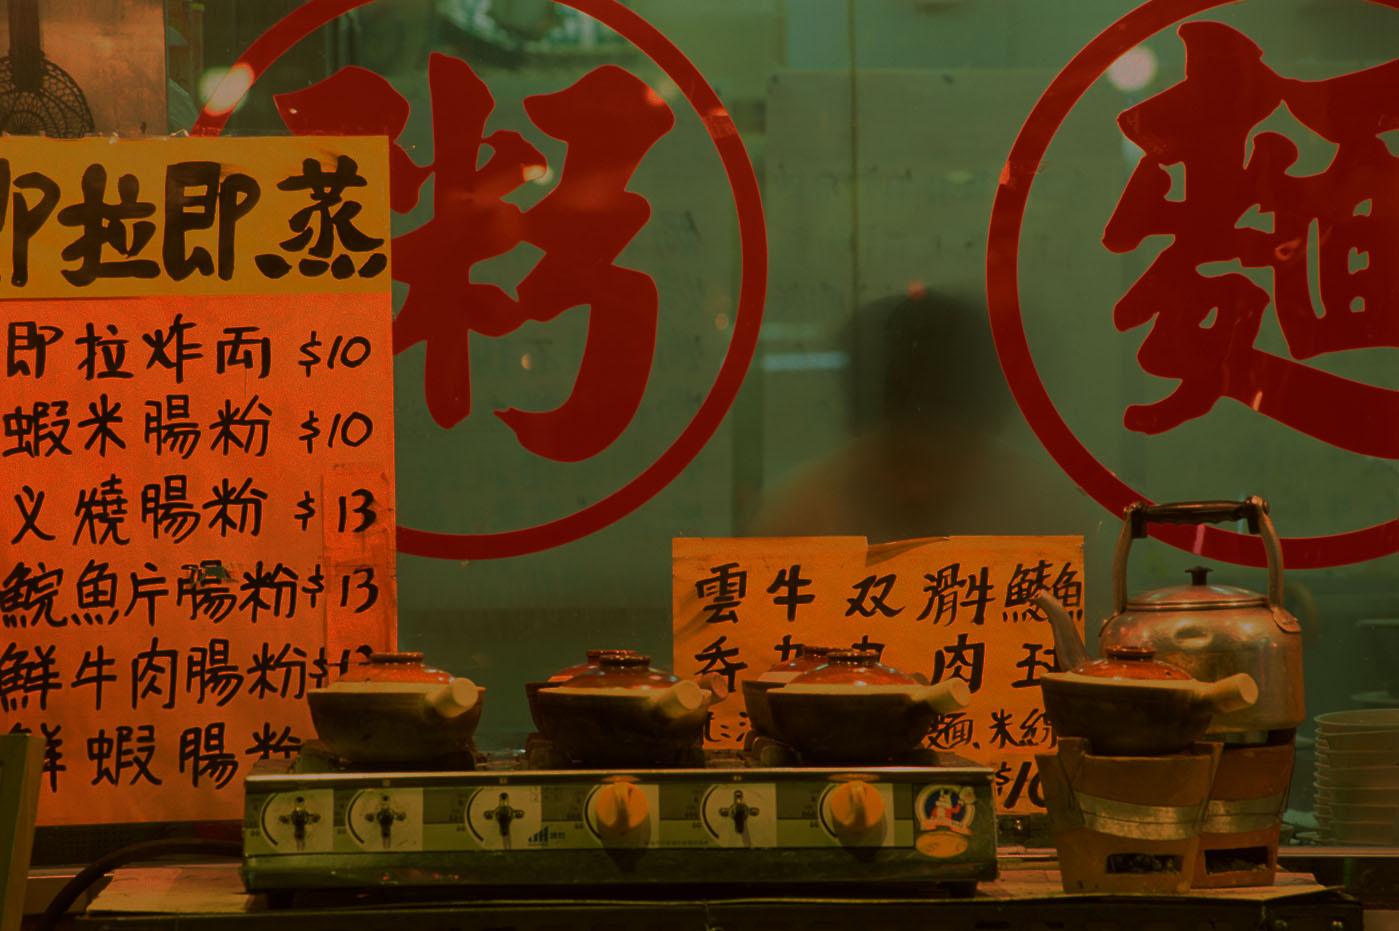 Ristorante cinese con cartelli in cinese.